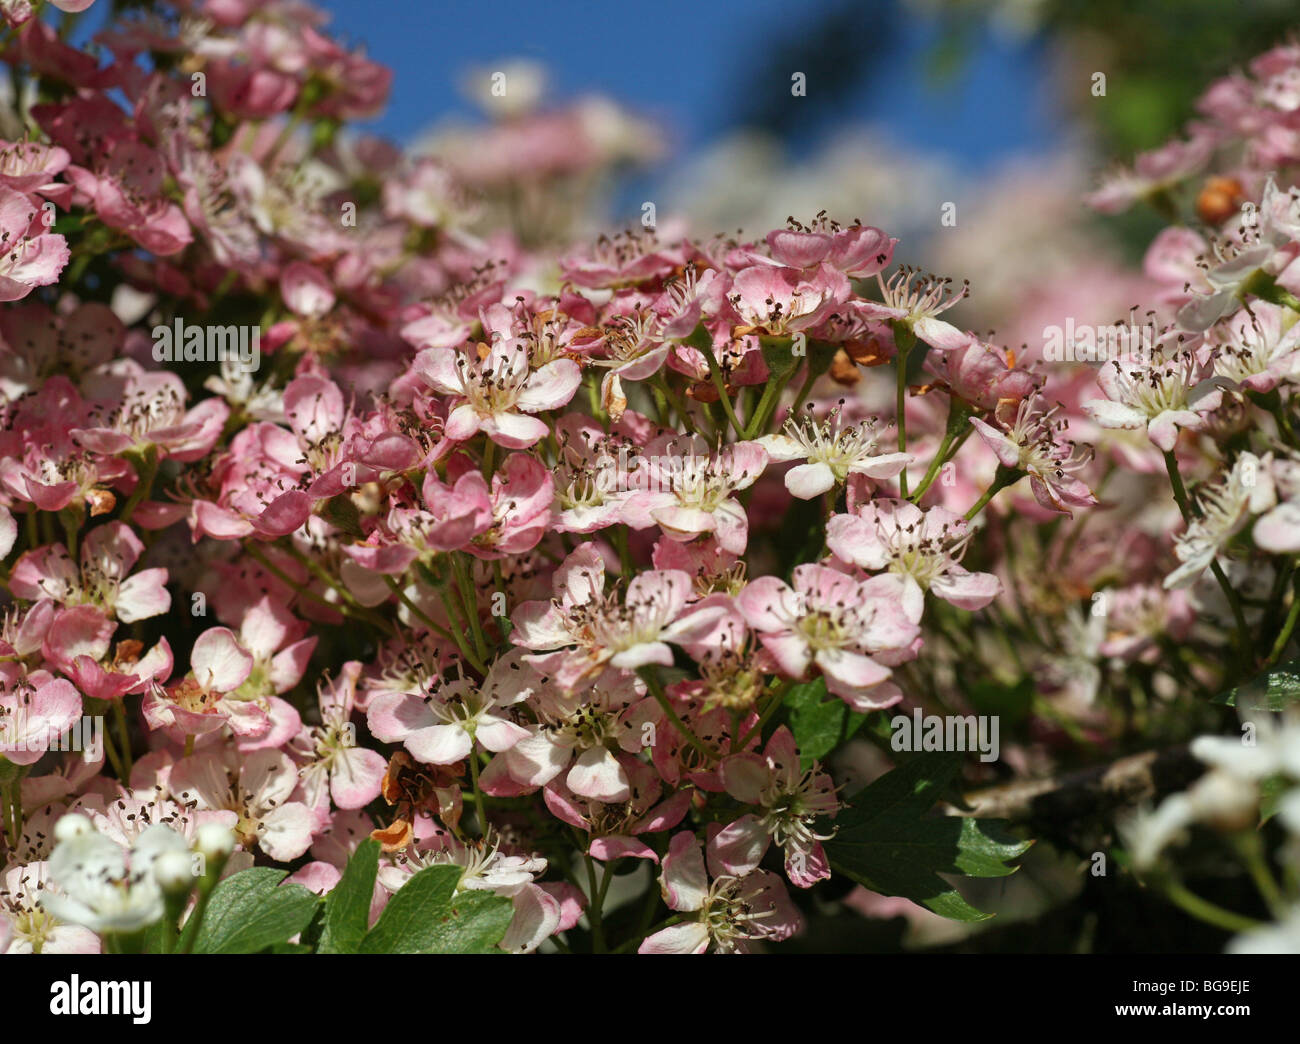 Pink Hawthorn flowers Crataegus monogyna, known as Common Hawthorn Stock Photo